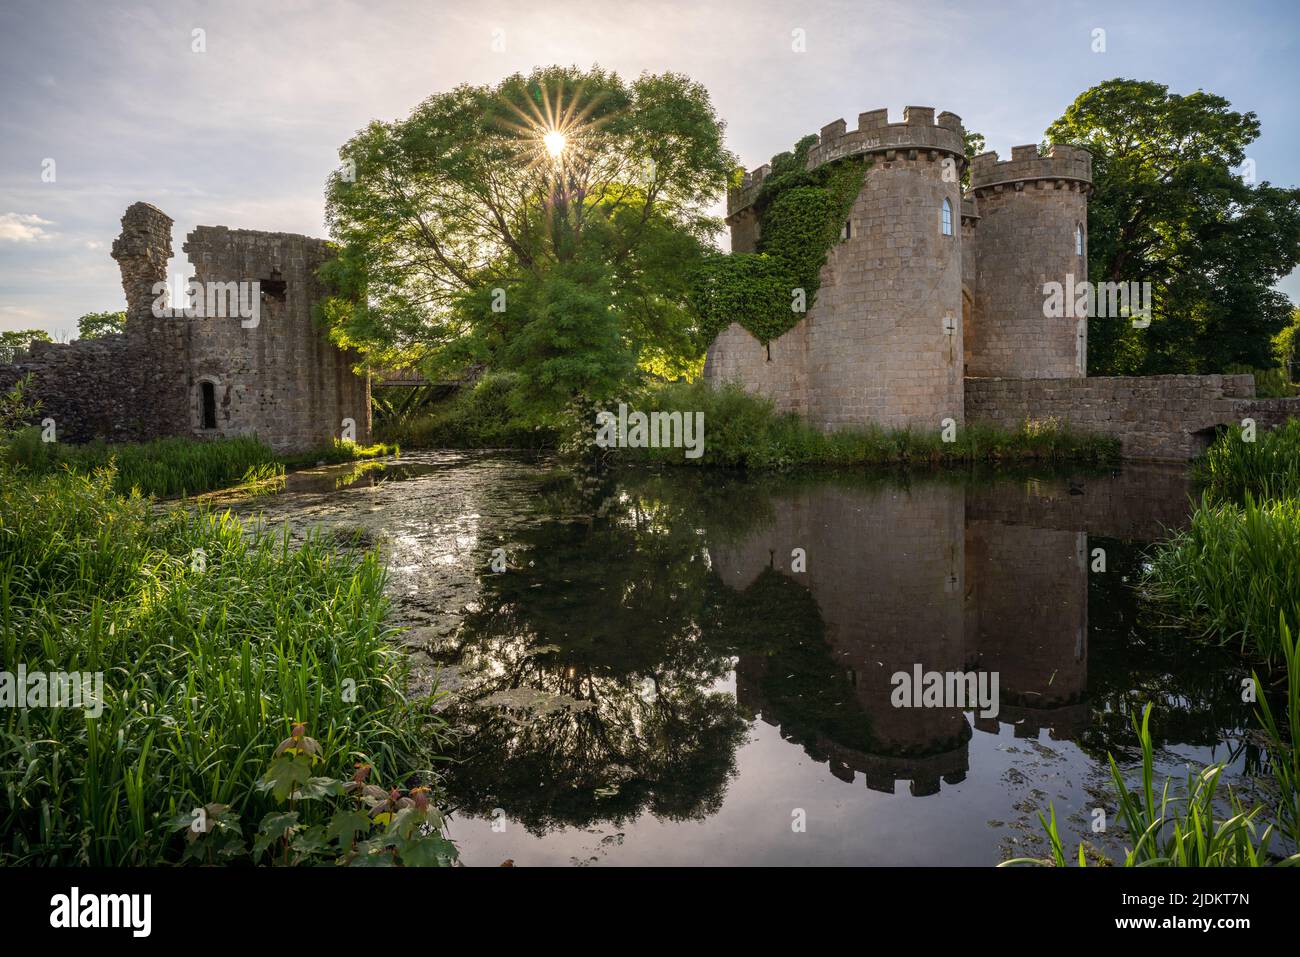 Evening photograph of Whittington Castle in Shropshire, England Stock Photo